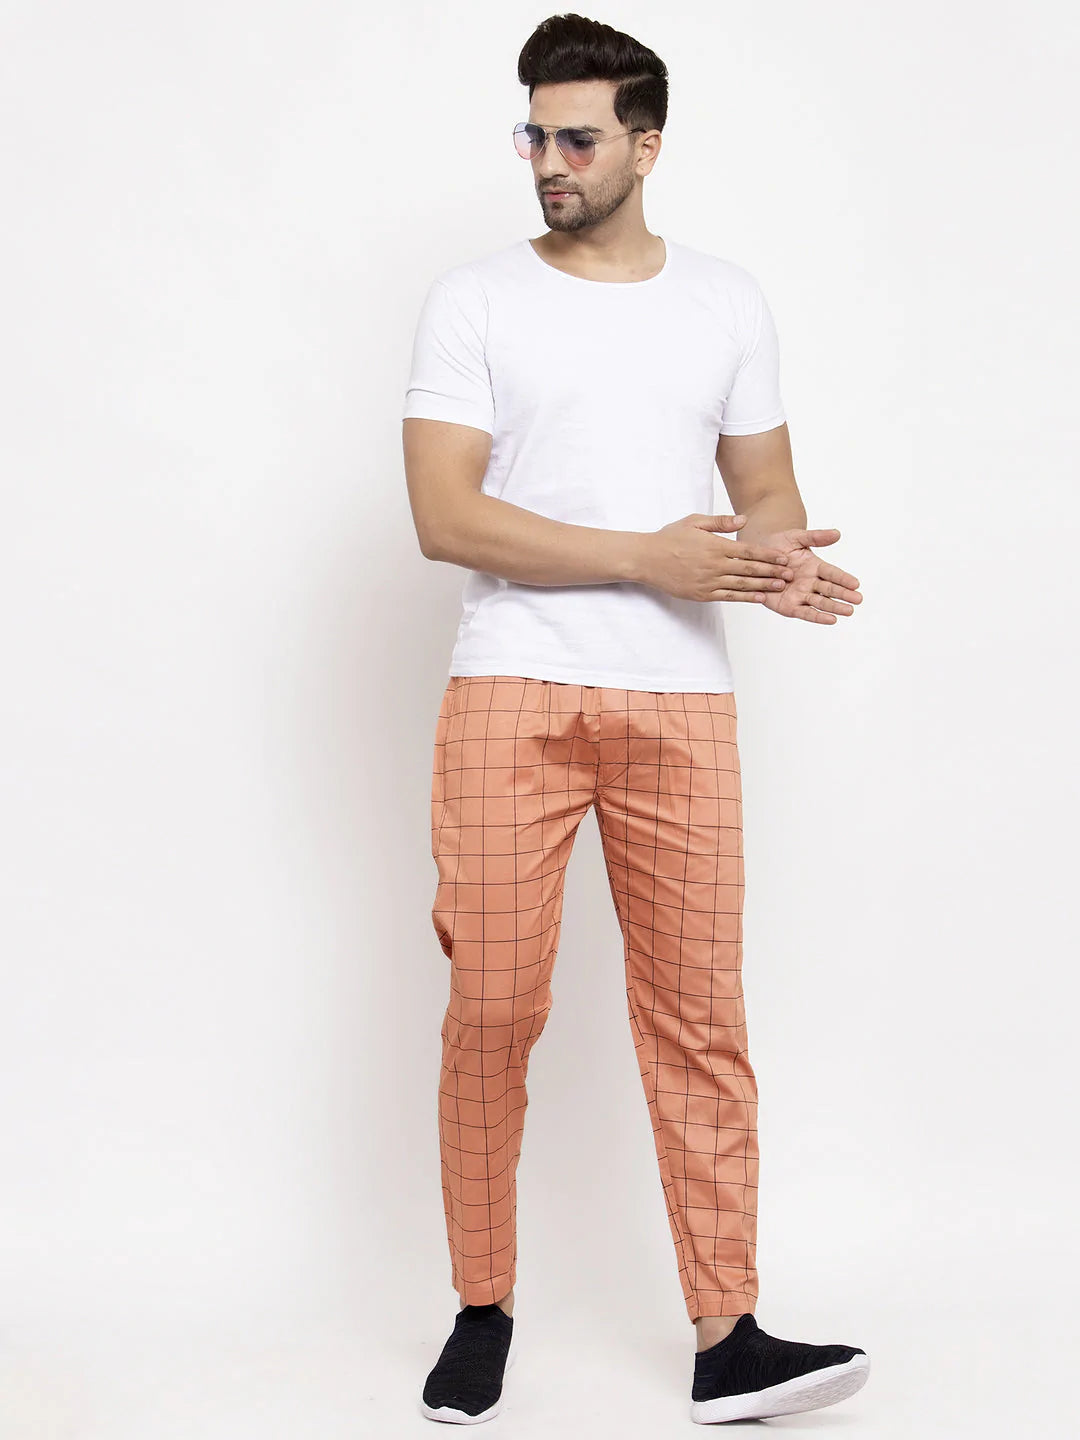 Jainish Men's Orange Checked Cotton Track Pants ( JOG 012Orange )